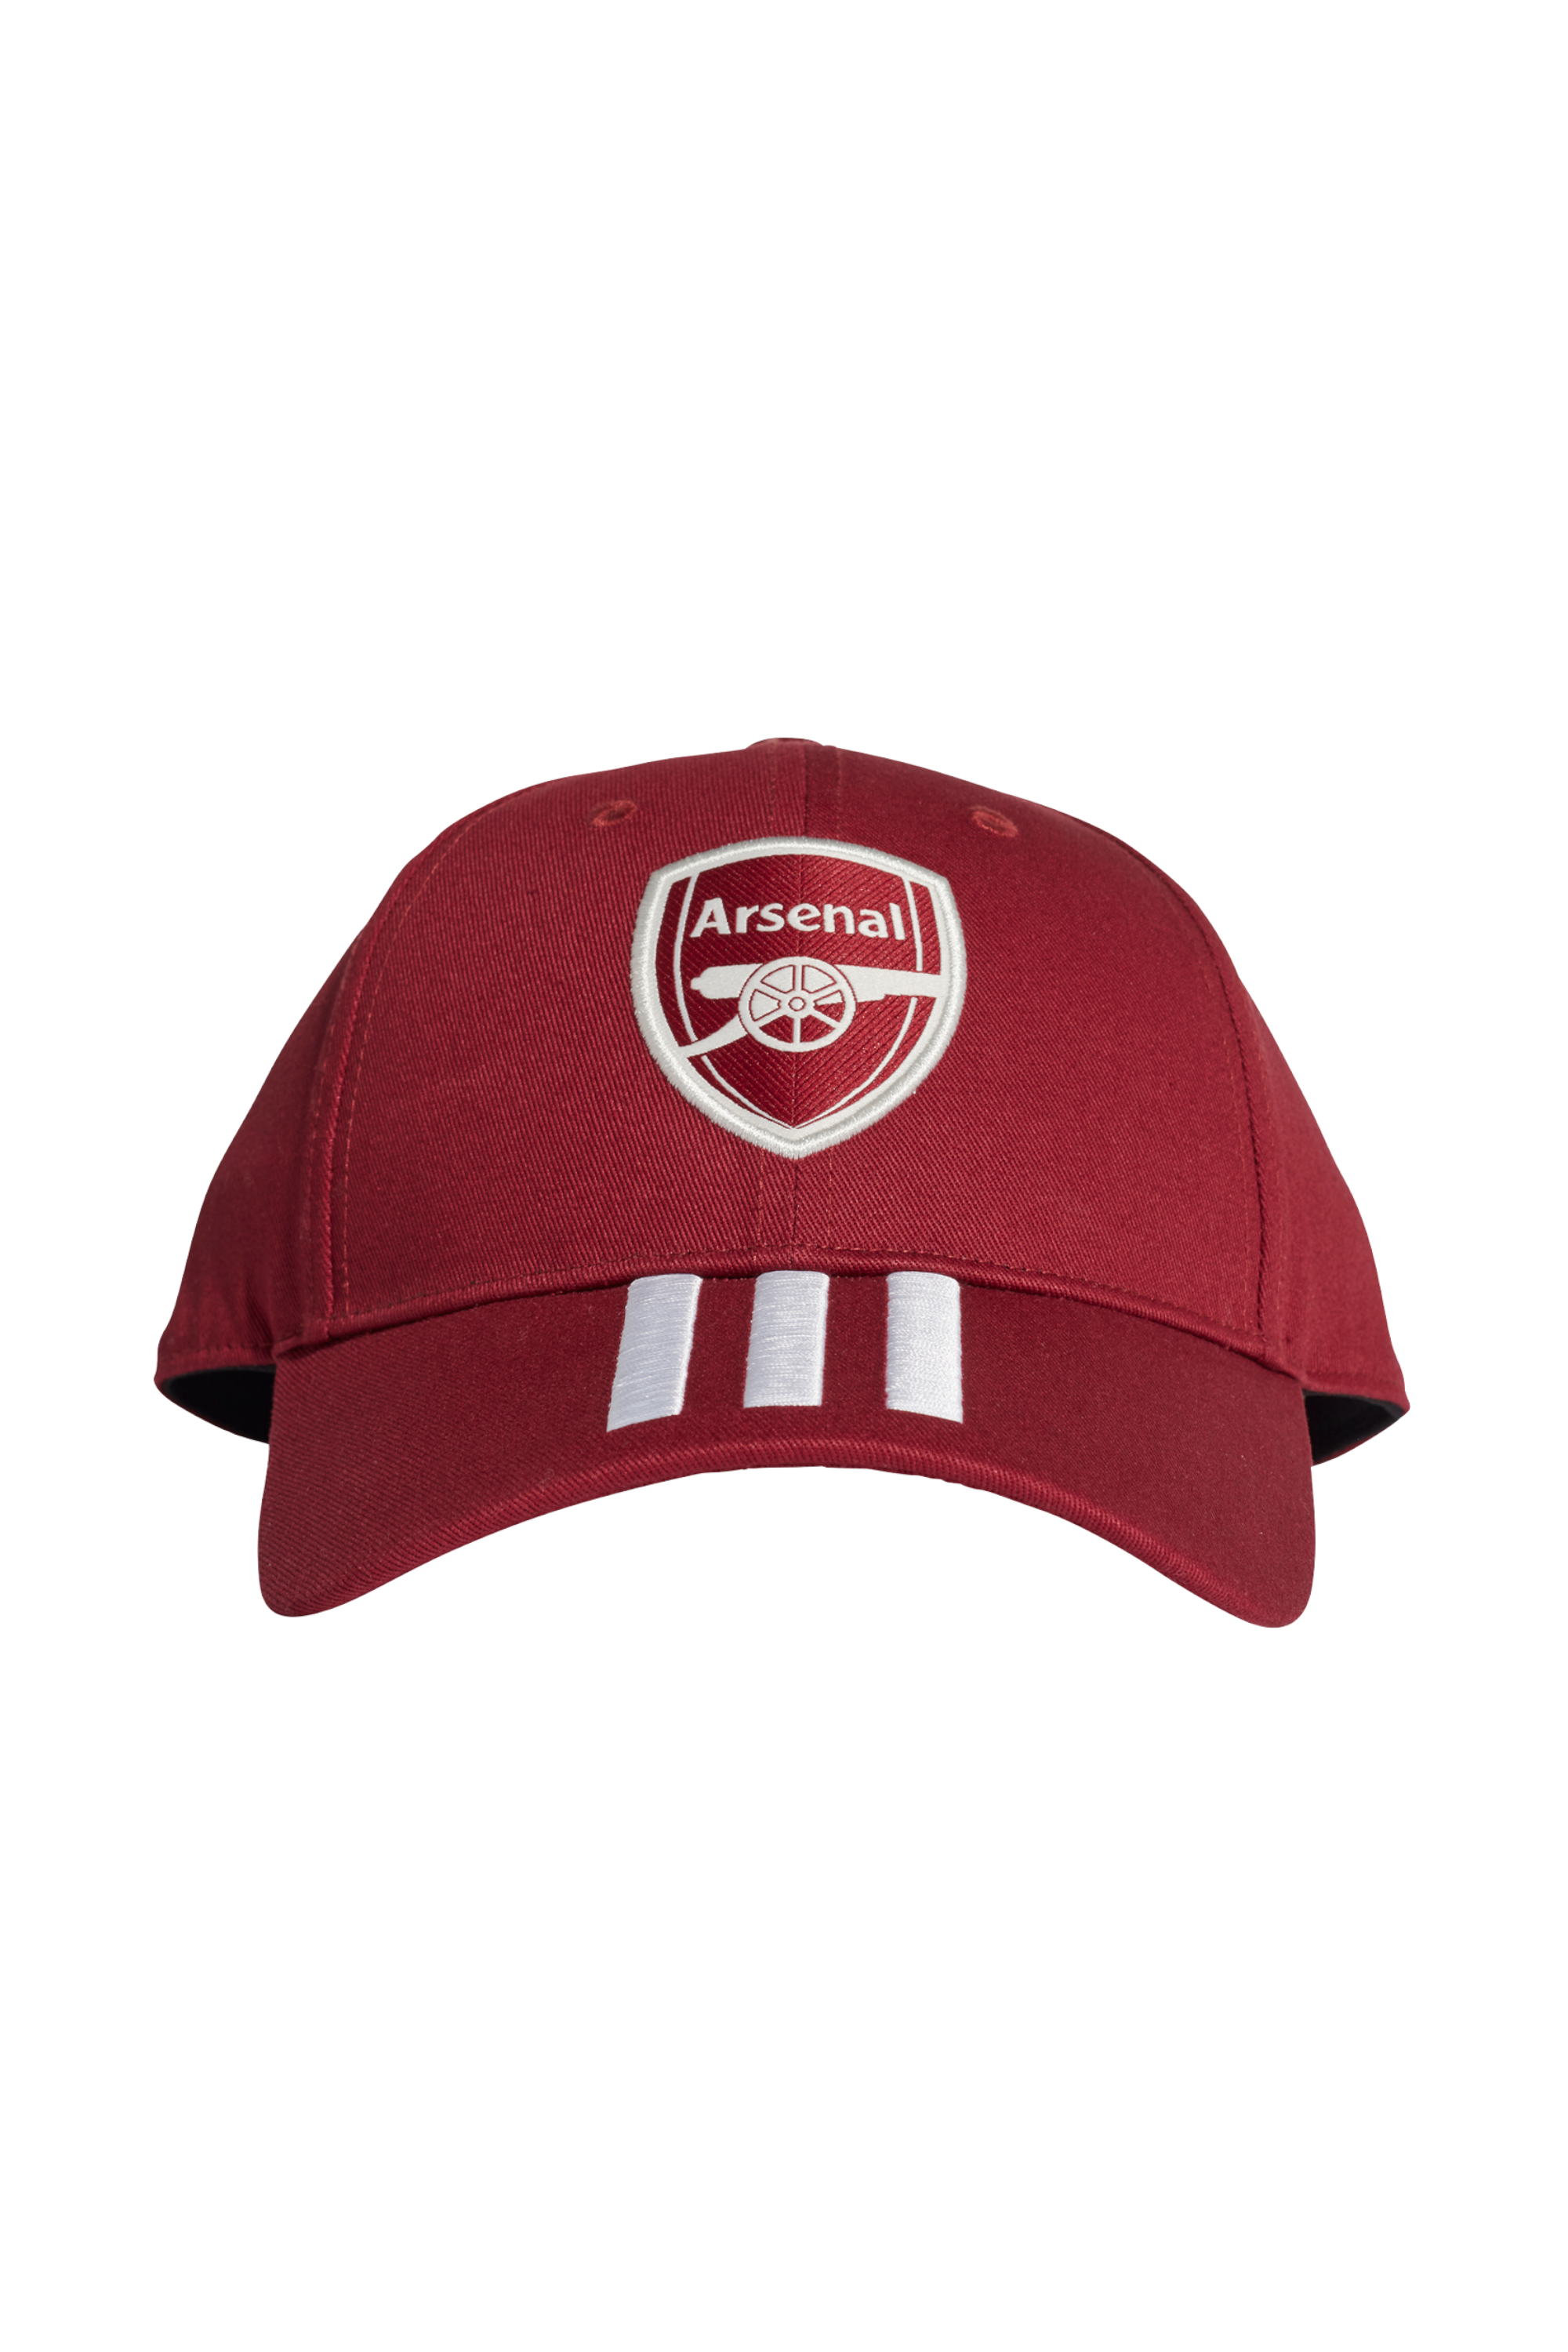 Arsenal London Base Cap 